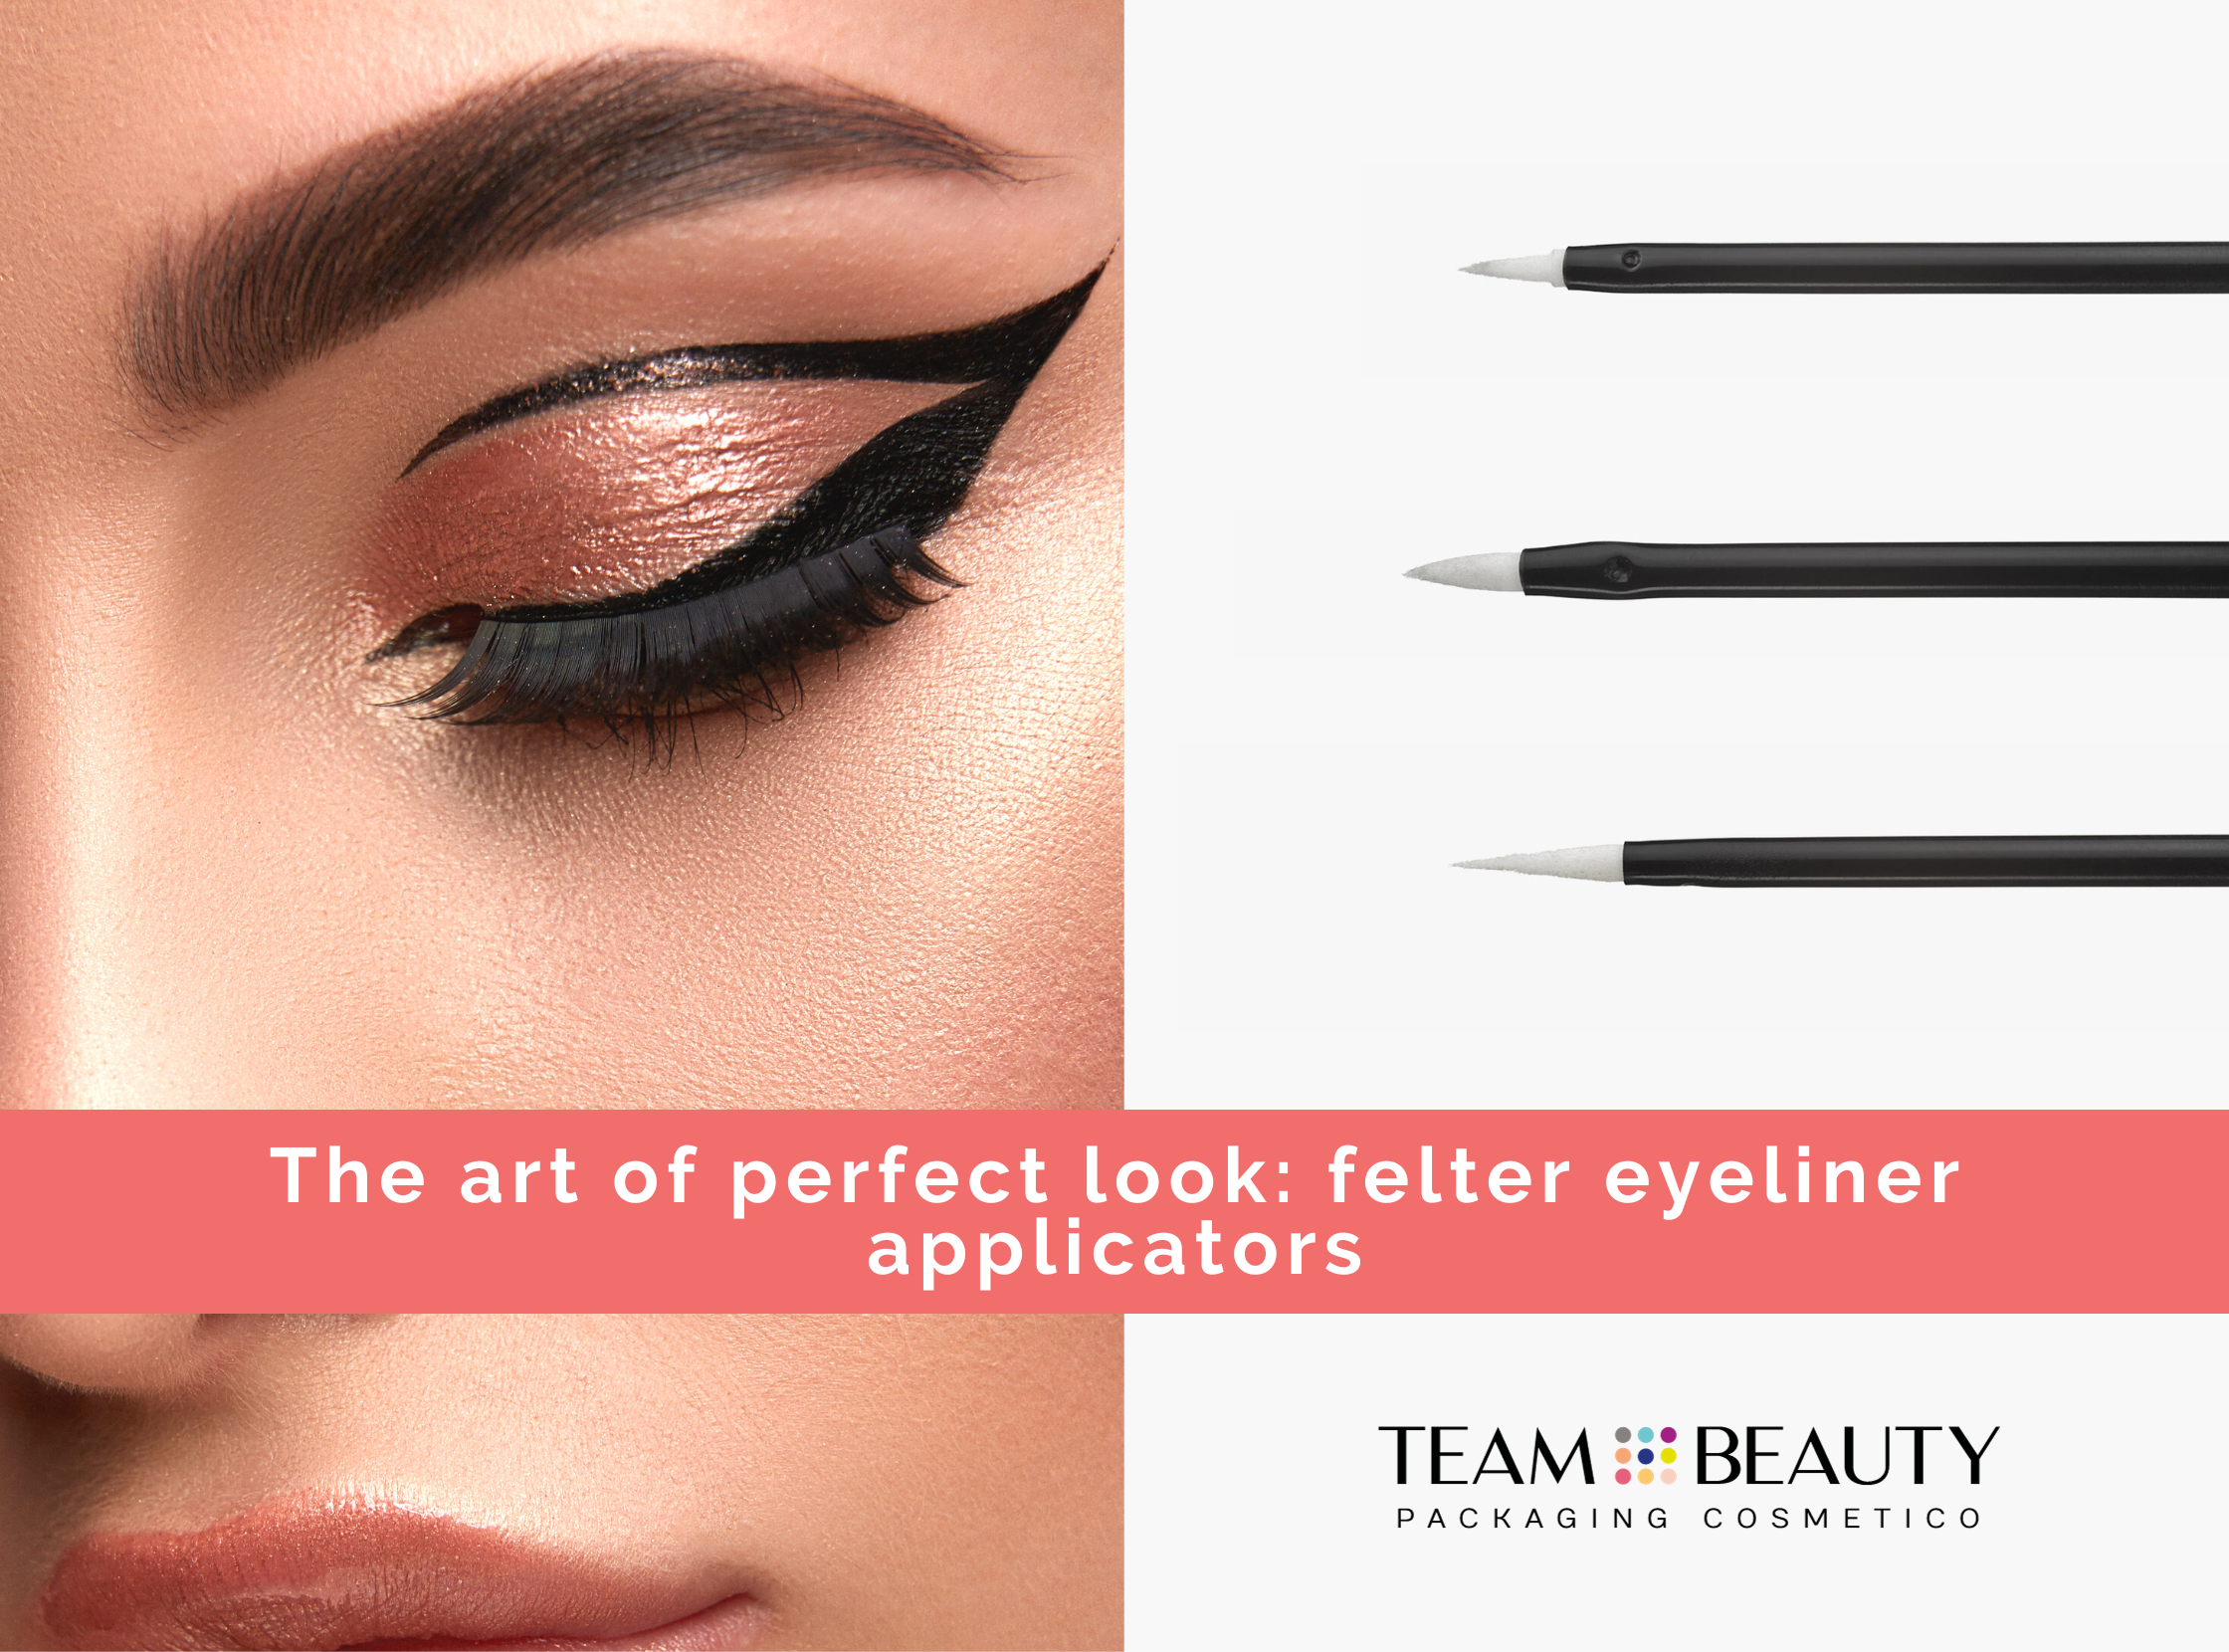 The art of perfect look: felter eyeliner applicators